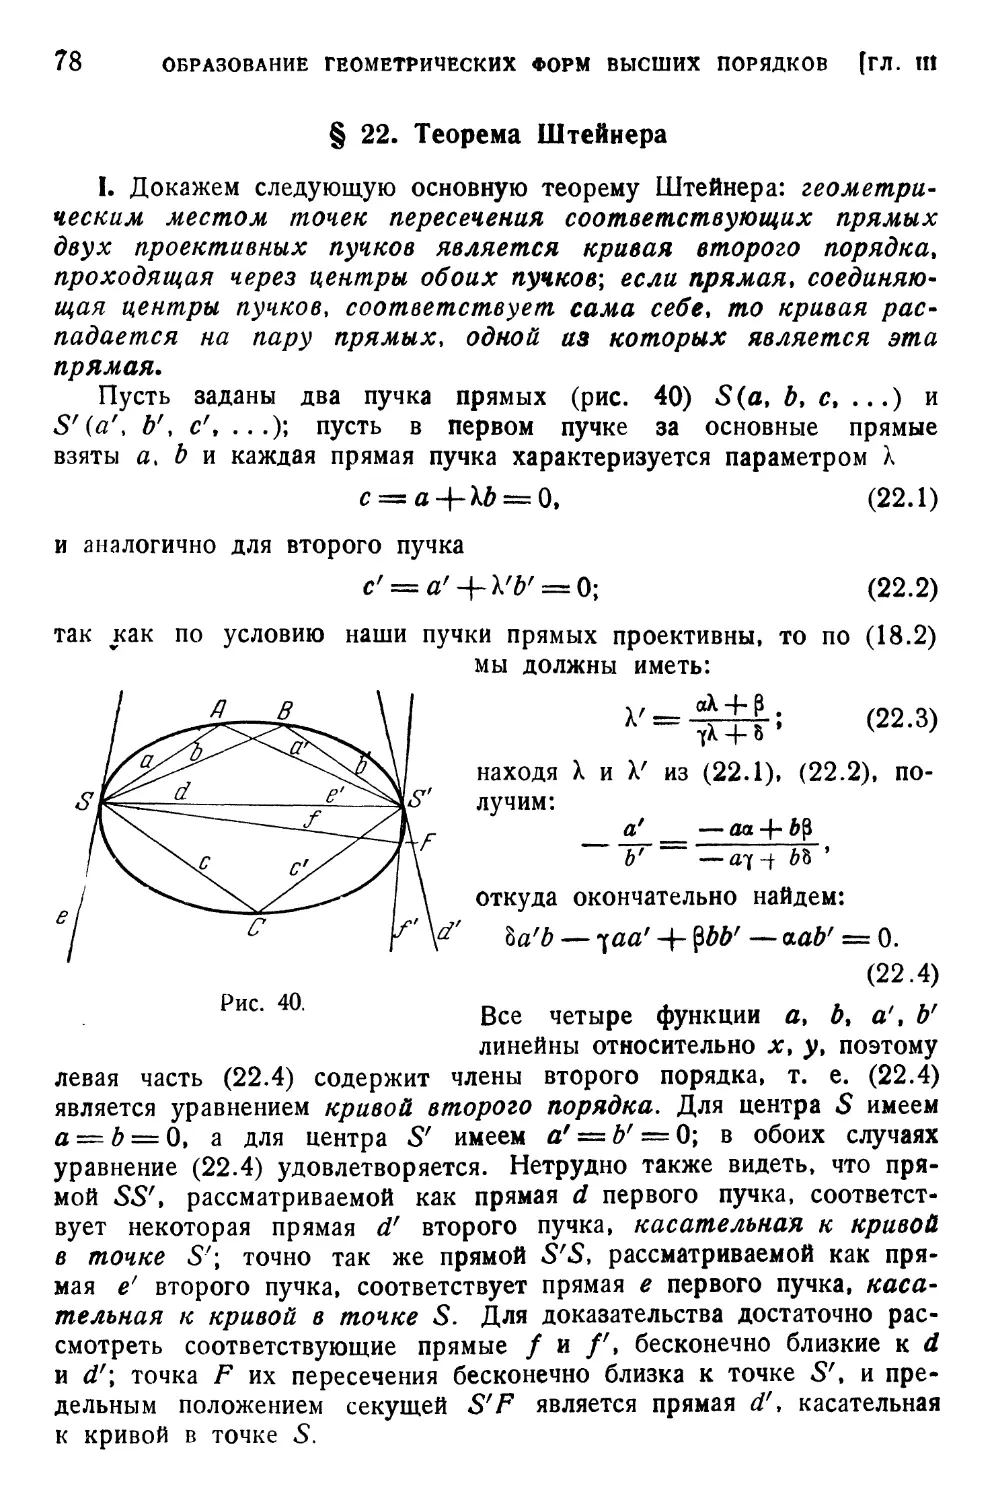 § 22. Теорема Штейнера